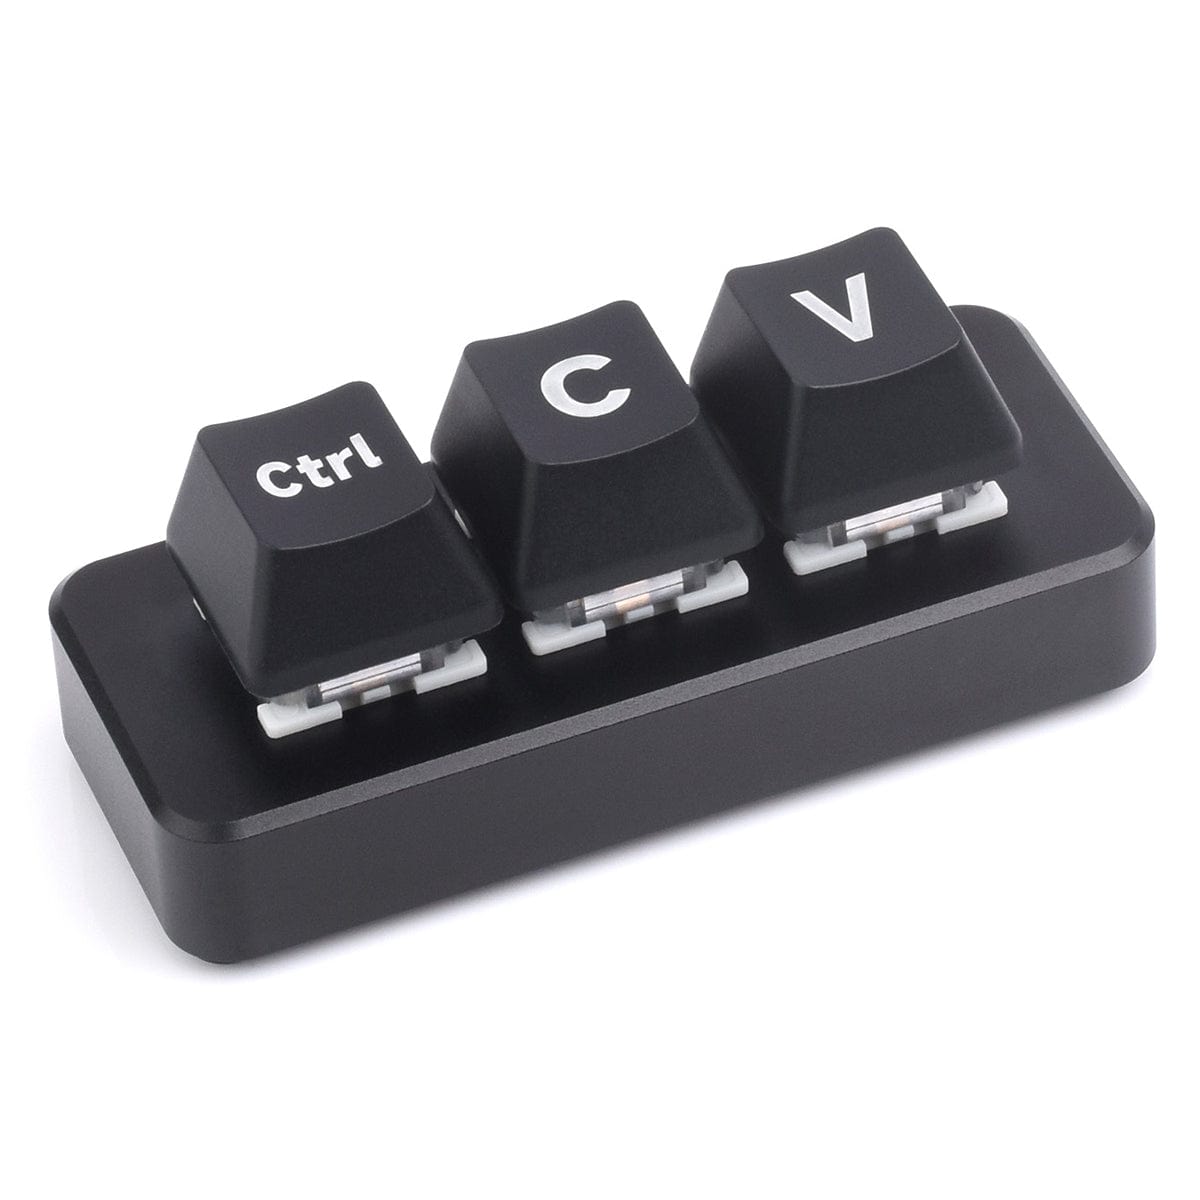 RP2040 Ctrl C/V Shortcut Keyboard Plus - The Pi Hut